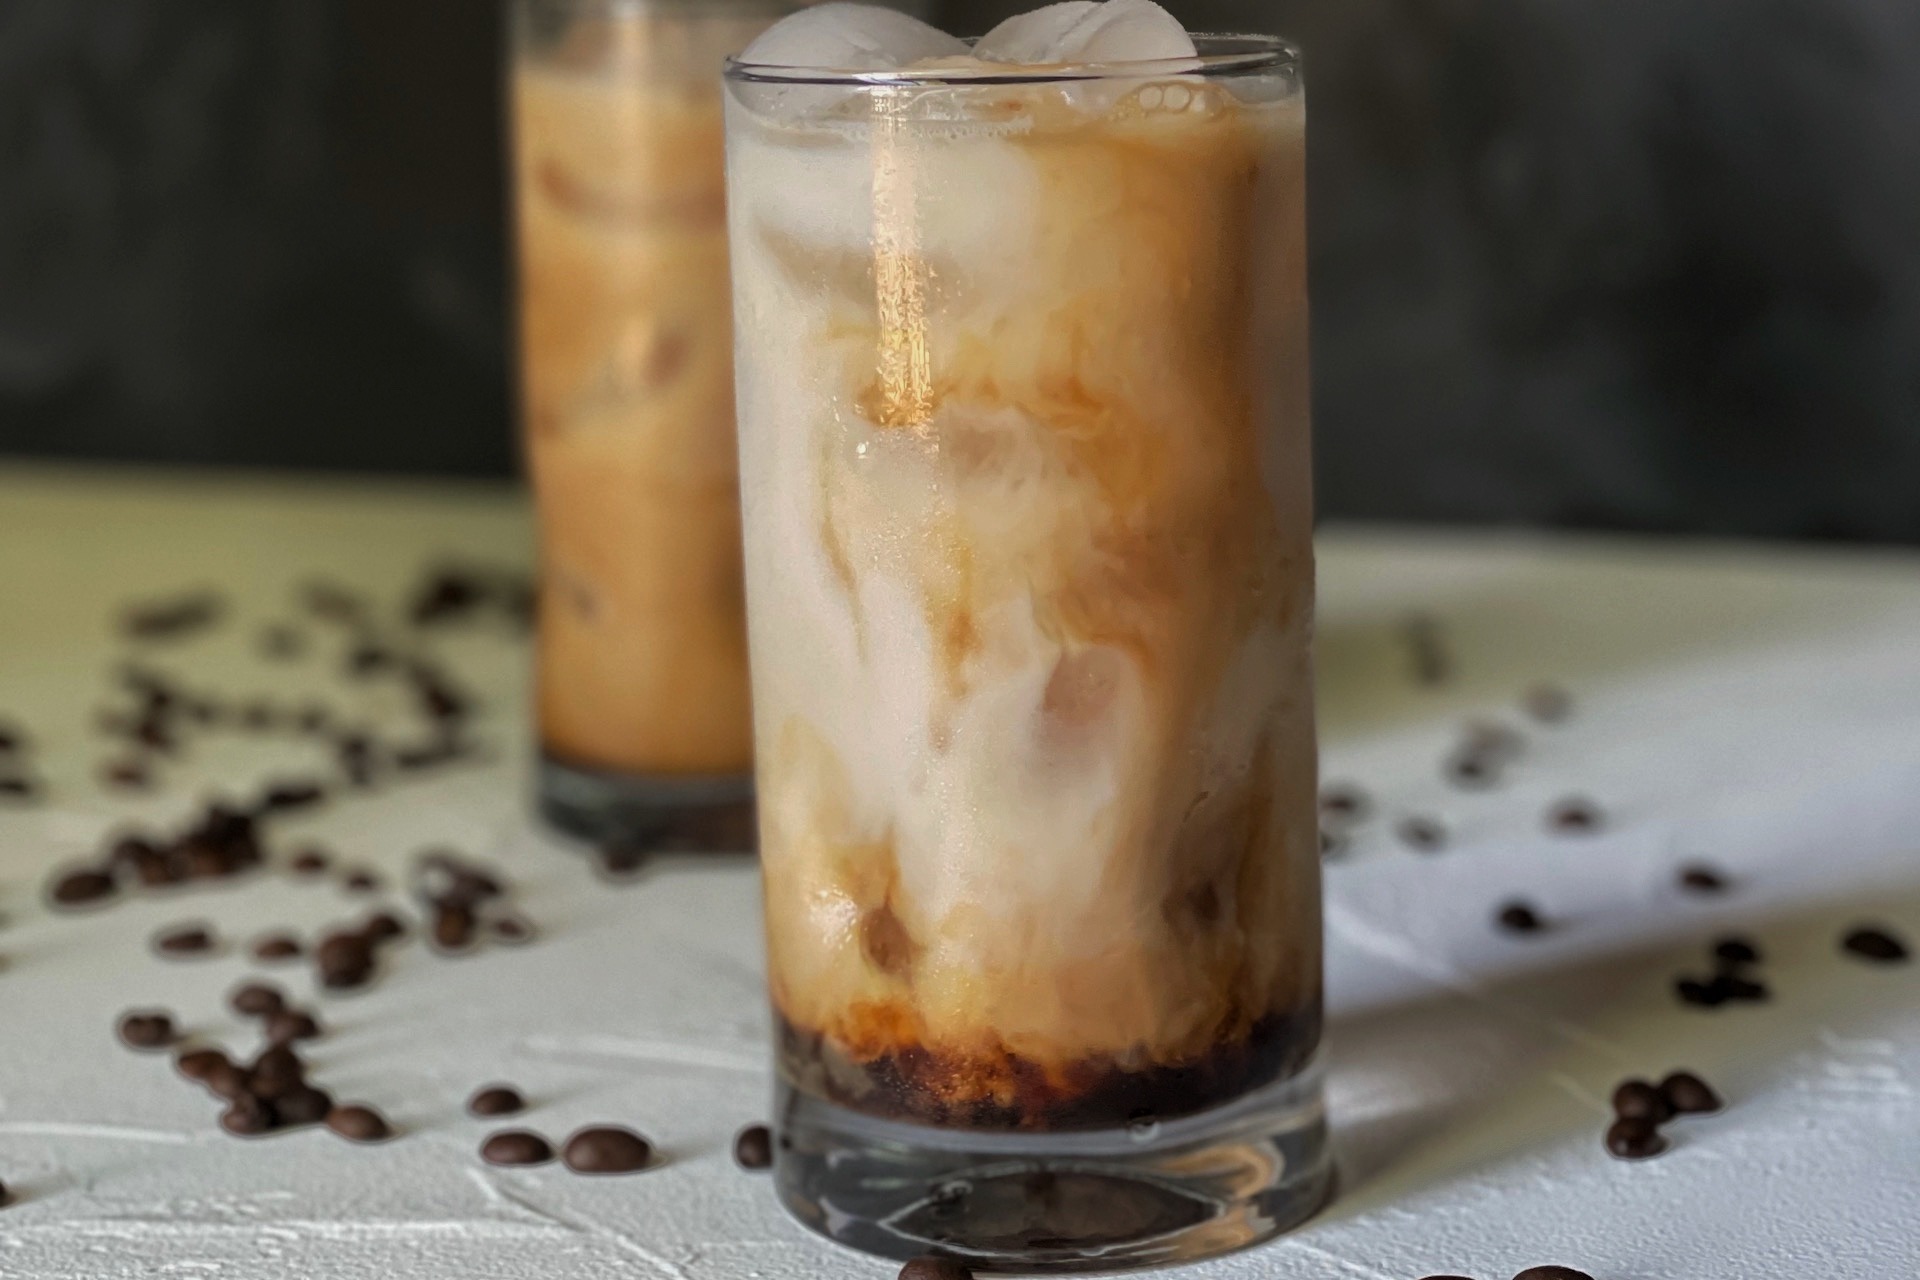 Vanilla Iced Latte Using Nespresso, Recipe